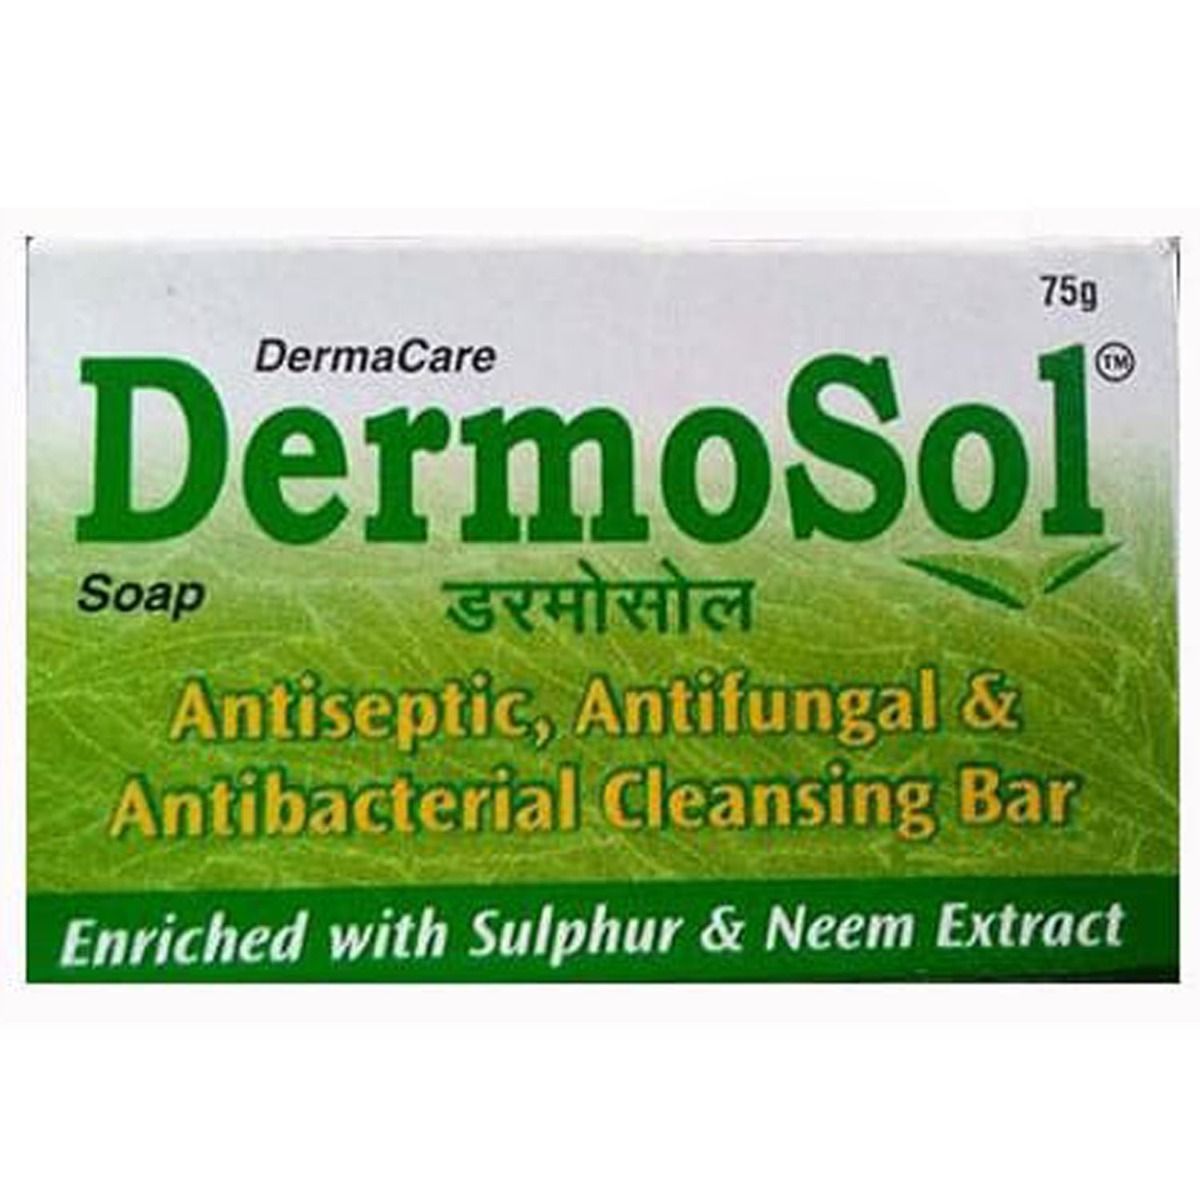 Dermosol Soap, 75 gm, Pack of 1 